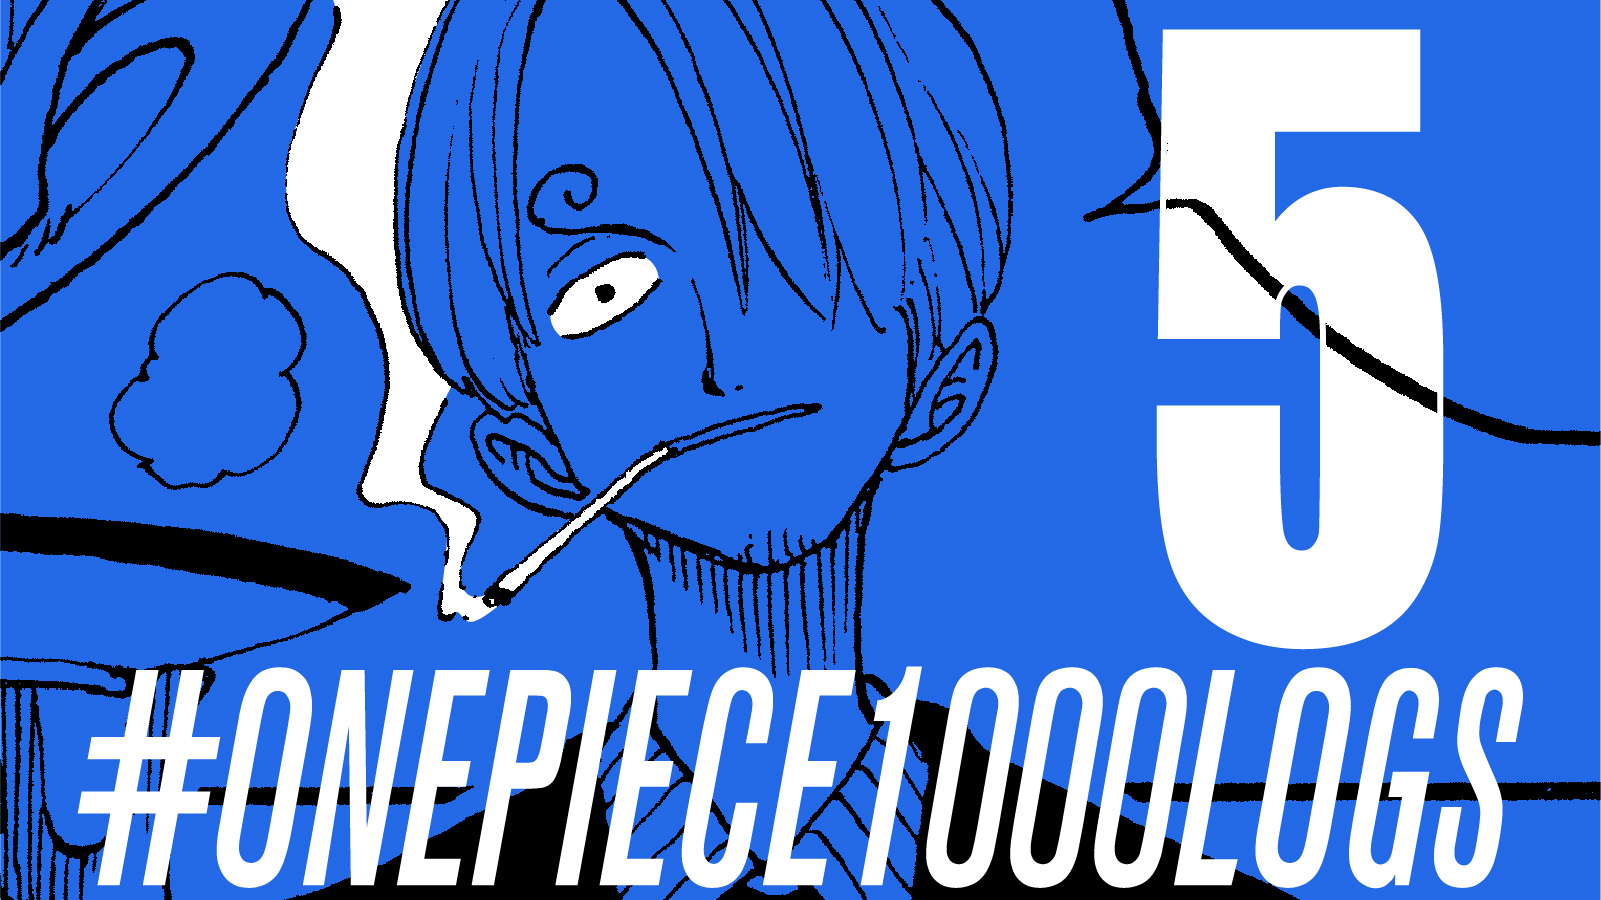 One Piece Manga 1000 Chapters Countdown image